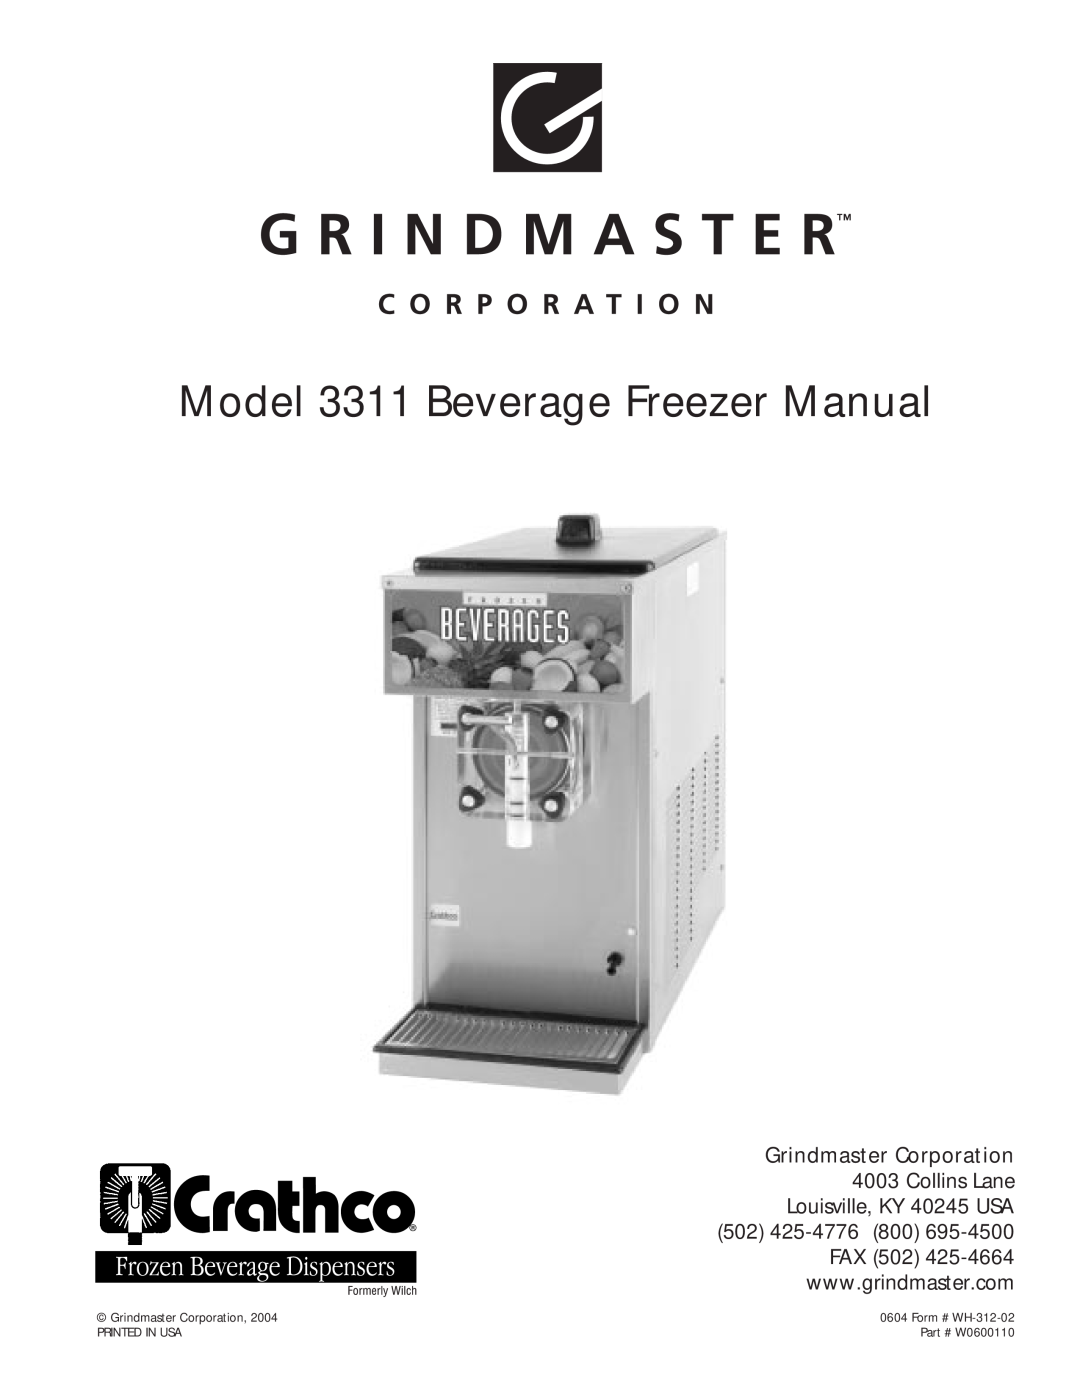 Beverage-Air manual Model 3311 Beverage Freezer Manual, Grindmaster Corporation, Form # WH-312-02, Part # W0600110 